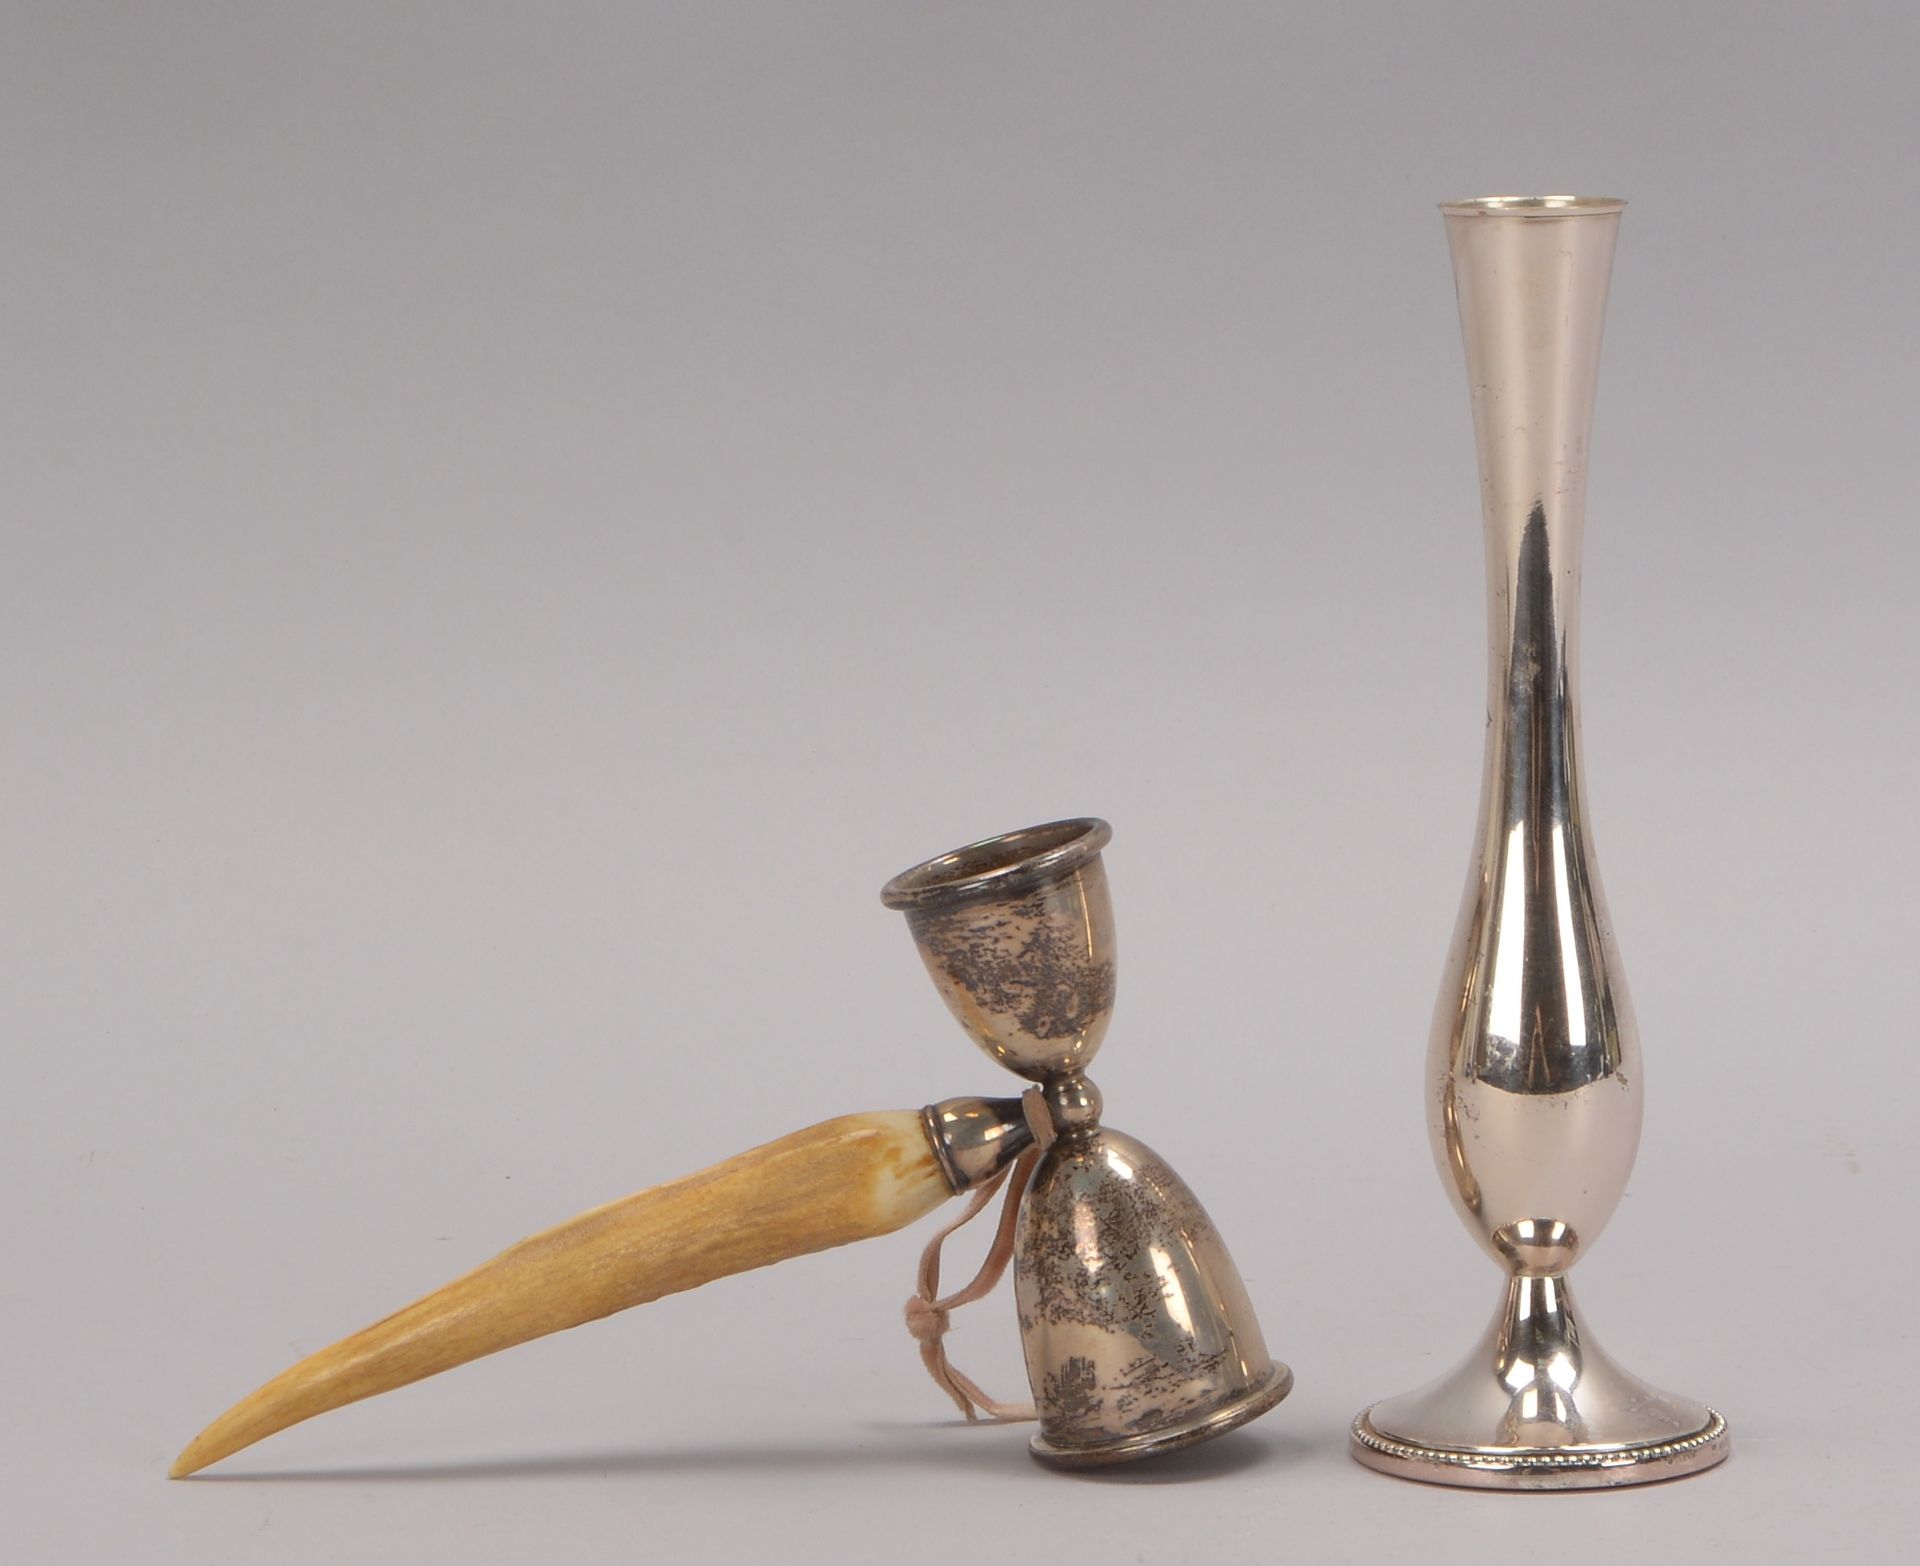 Wilkens, Tischvase, 835 Silber - gef&uuml;llt; H&ouml;he 22 cm; und Silber-Kerzenl&ouml;scher, doppe